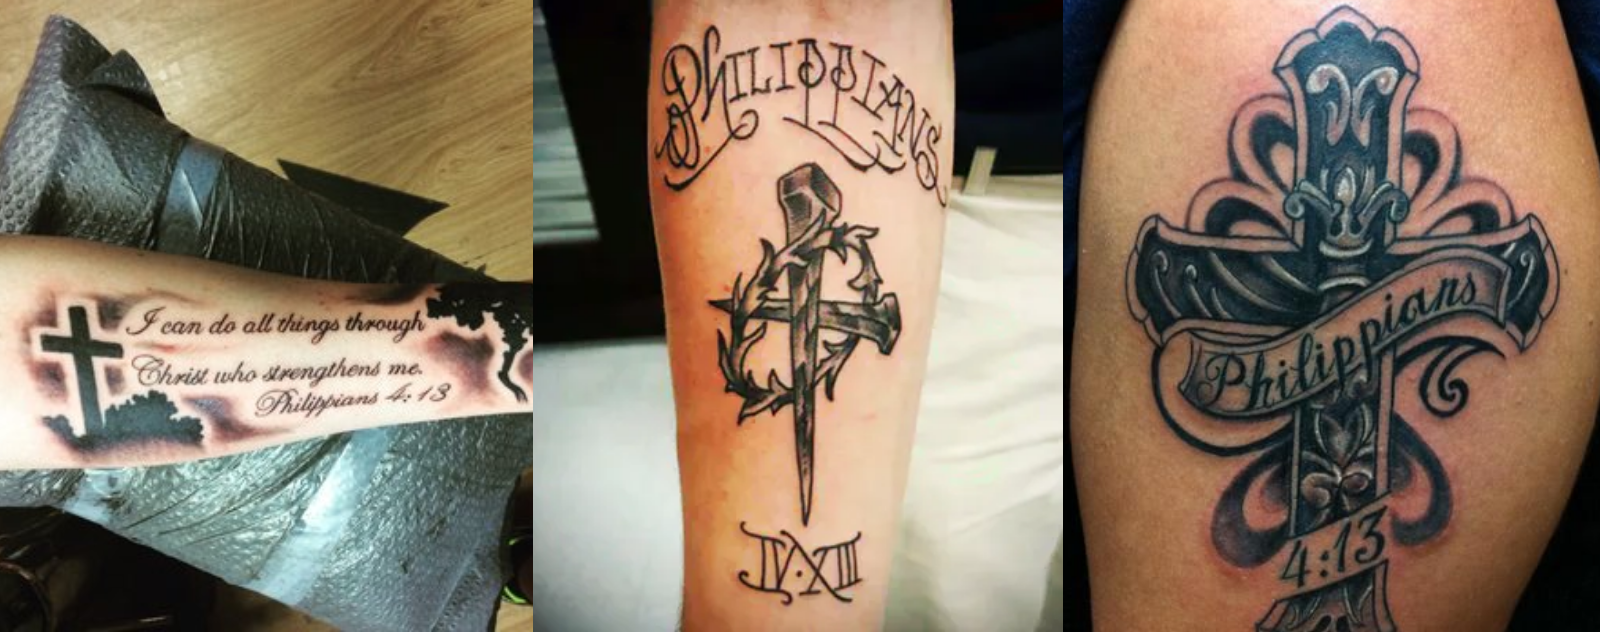 philippians-4-13-tattoo-with-cross-12